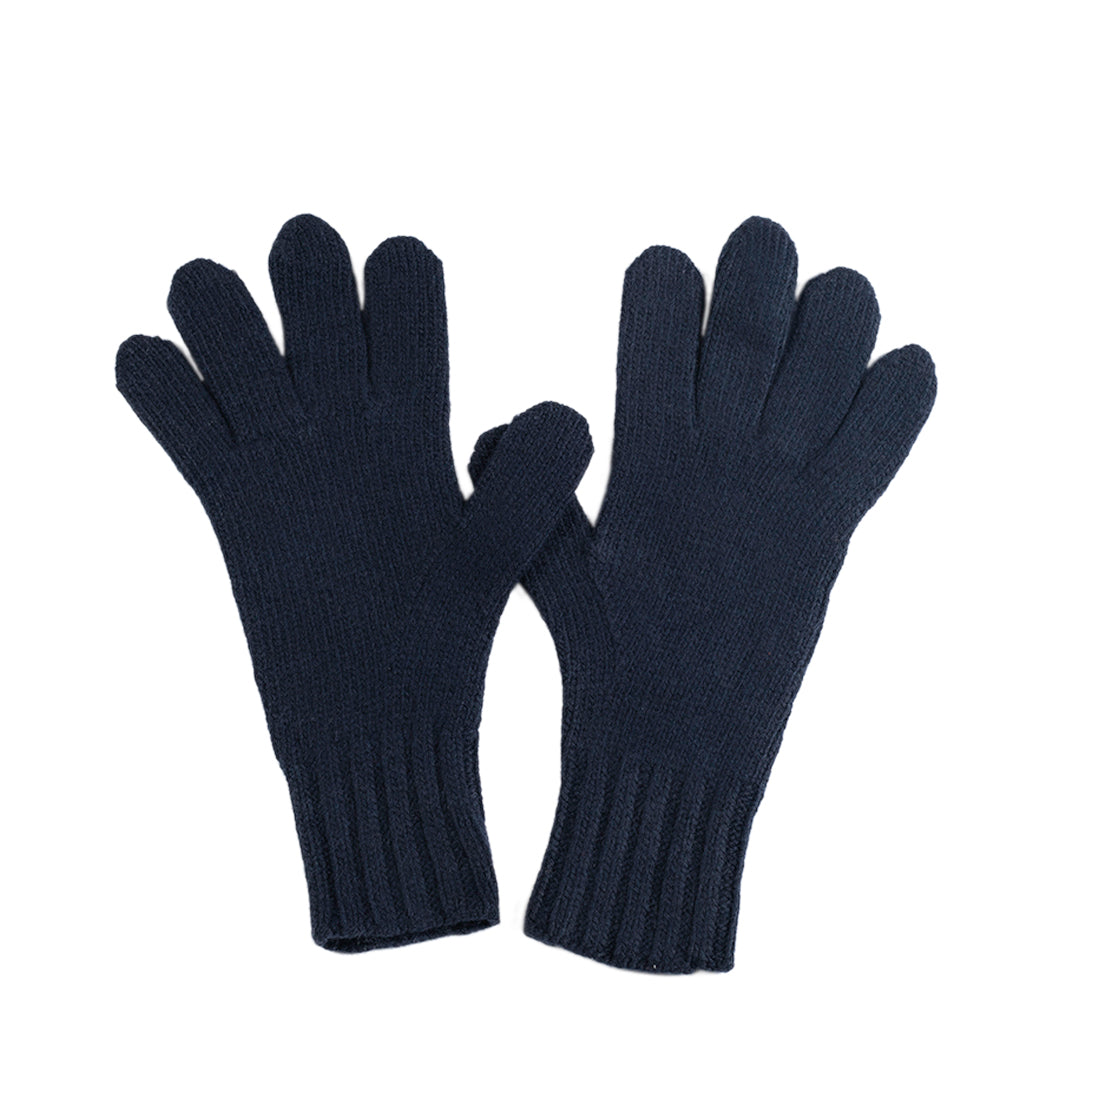 The Women's Cashmere Glove